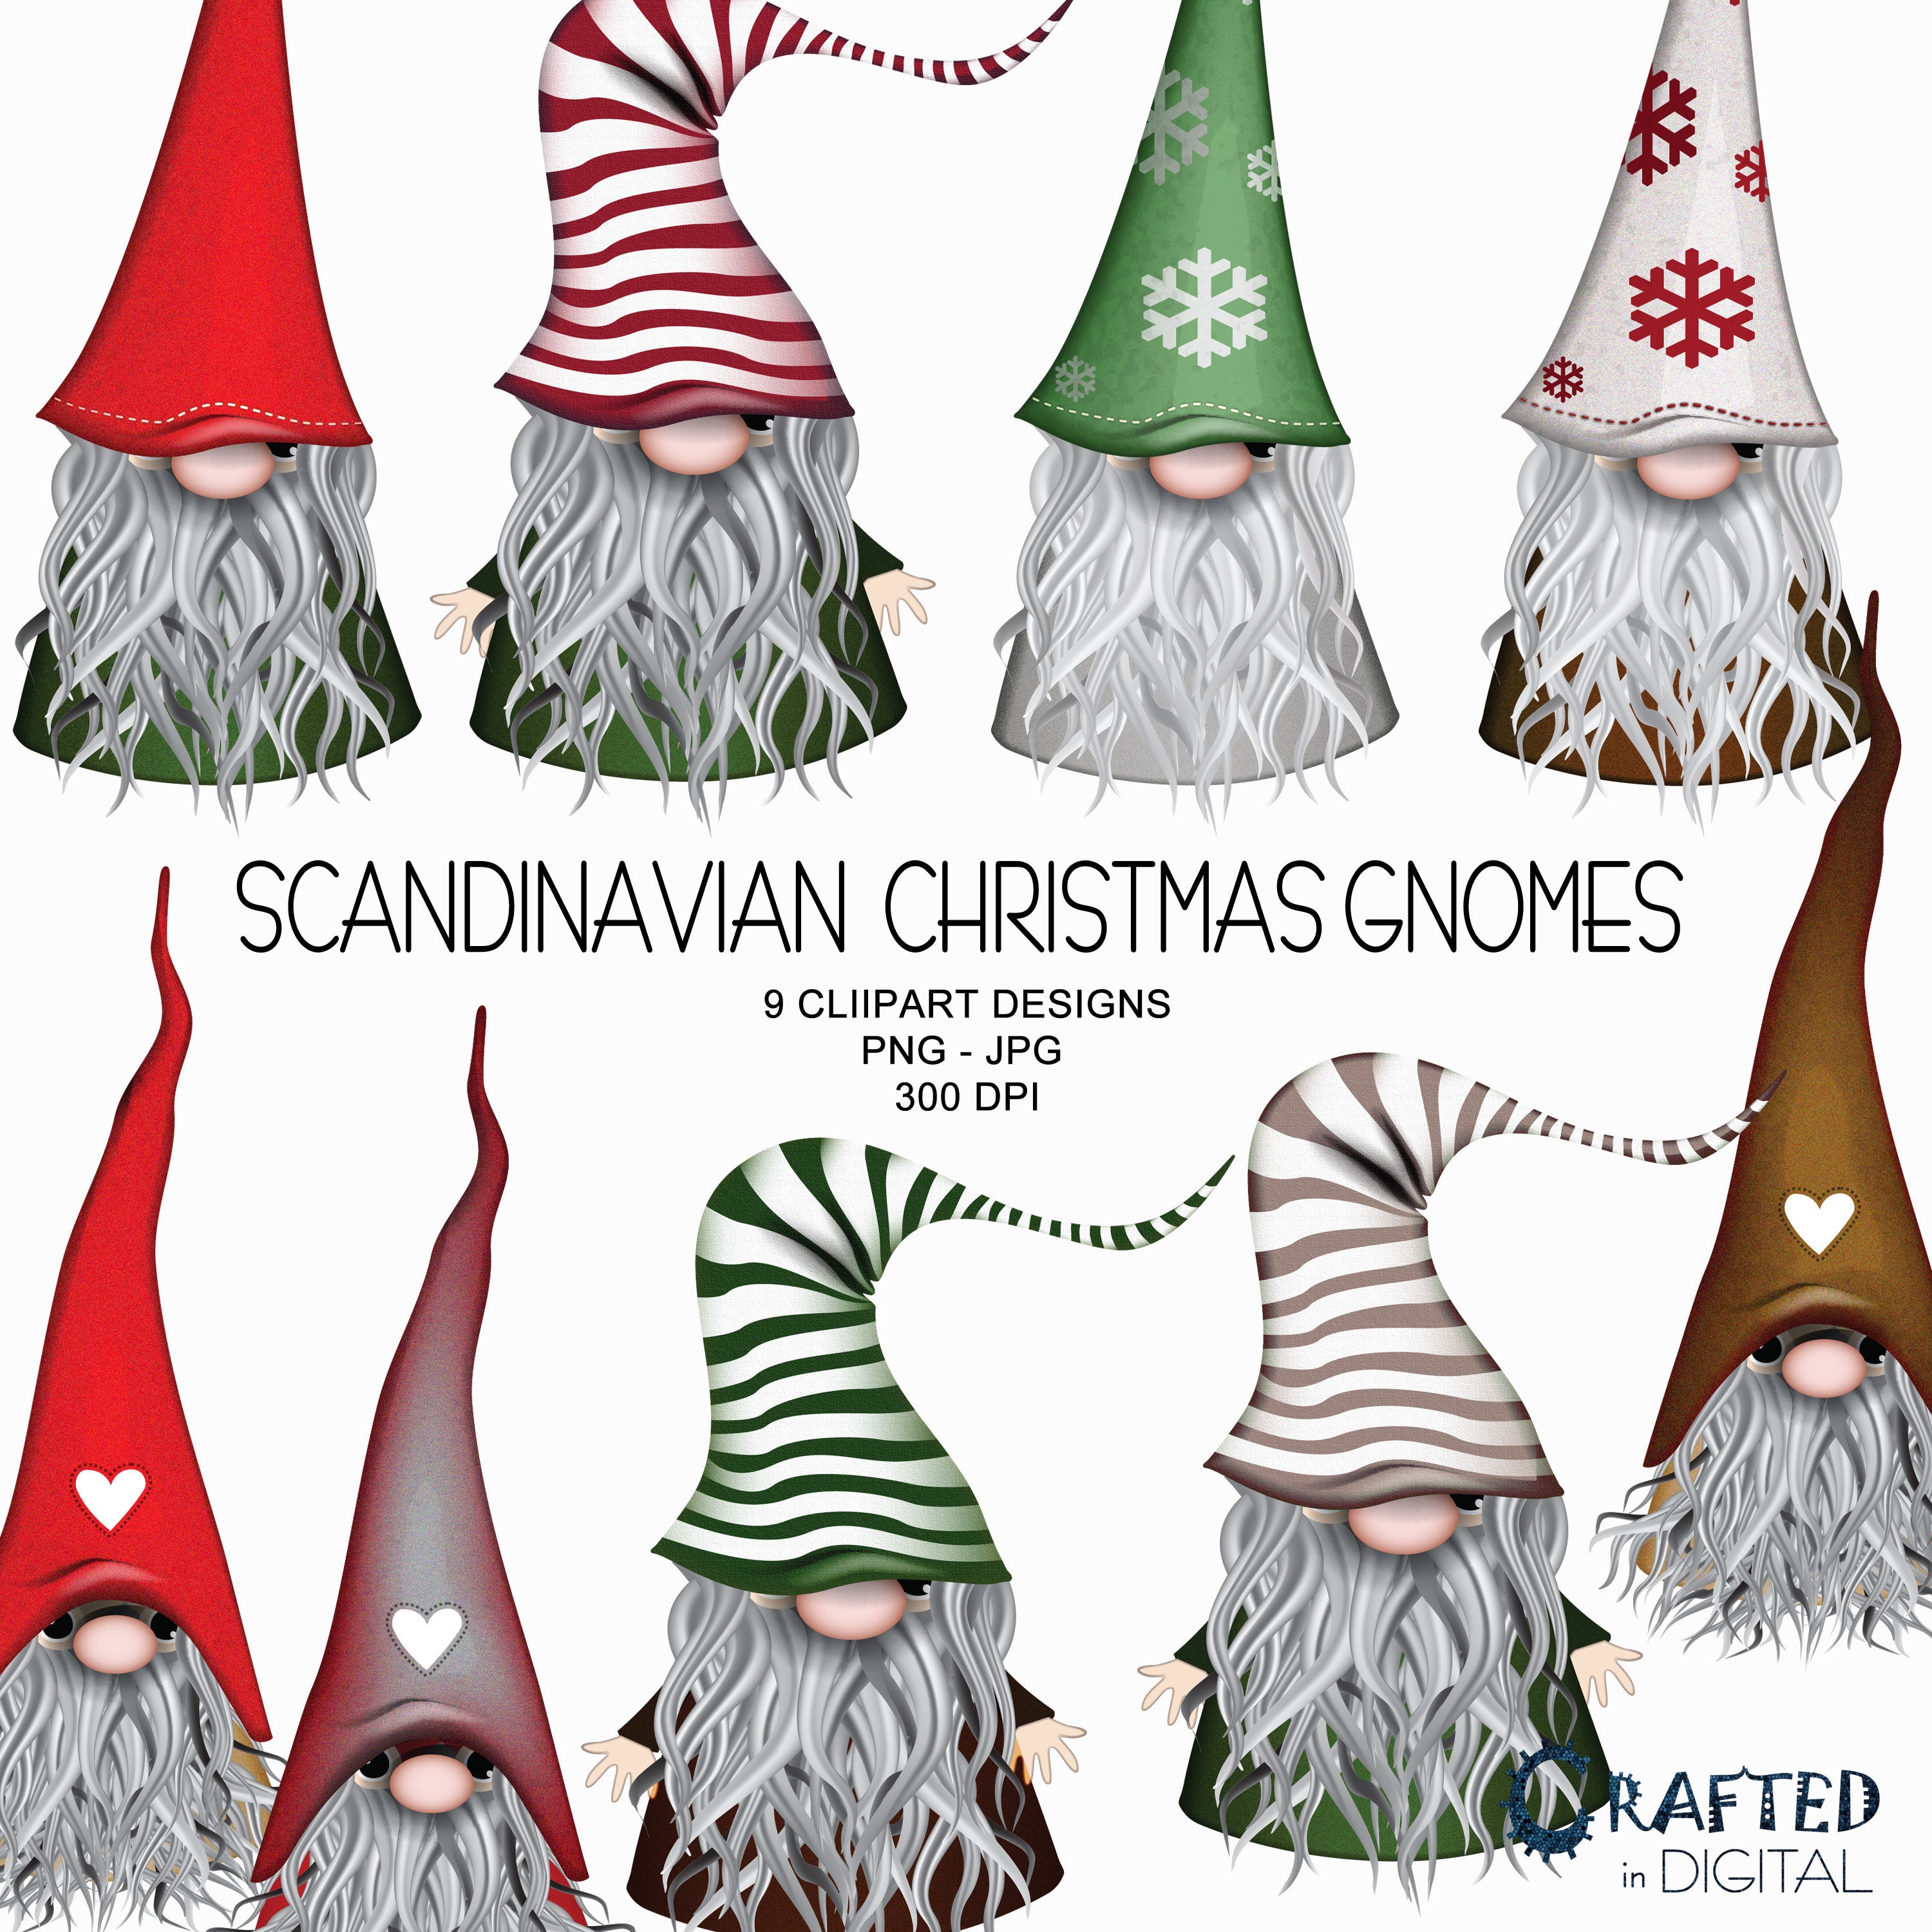 9 Scandinavian Christmas Gnomes Tomte Nisse Santa Elf Etsy